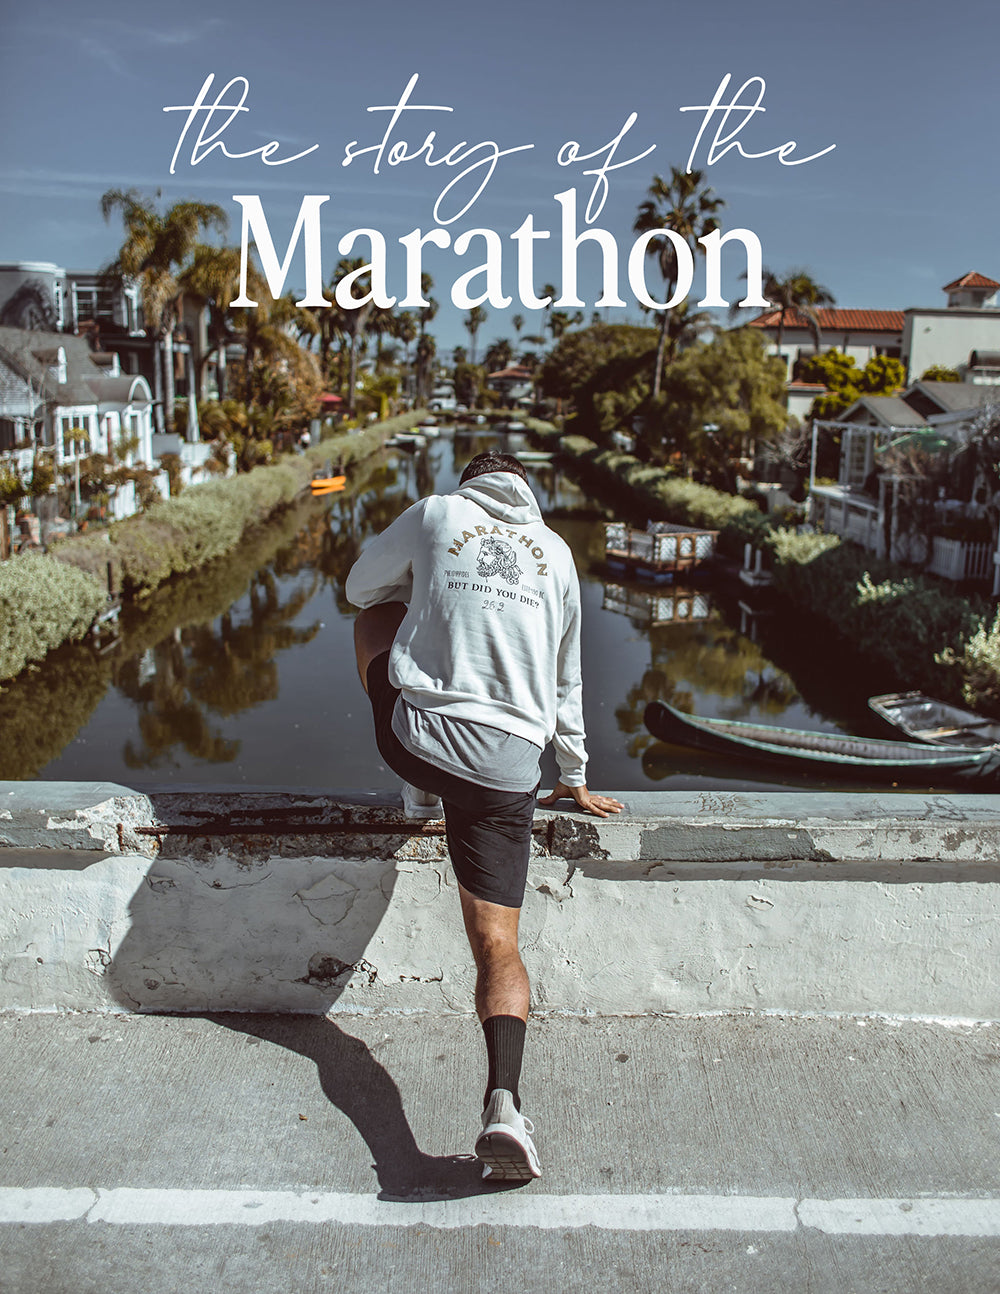 Why is a marathon 26.2 miles?